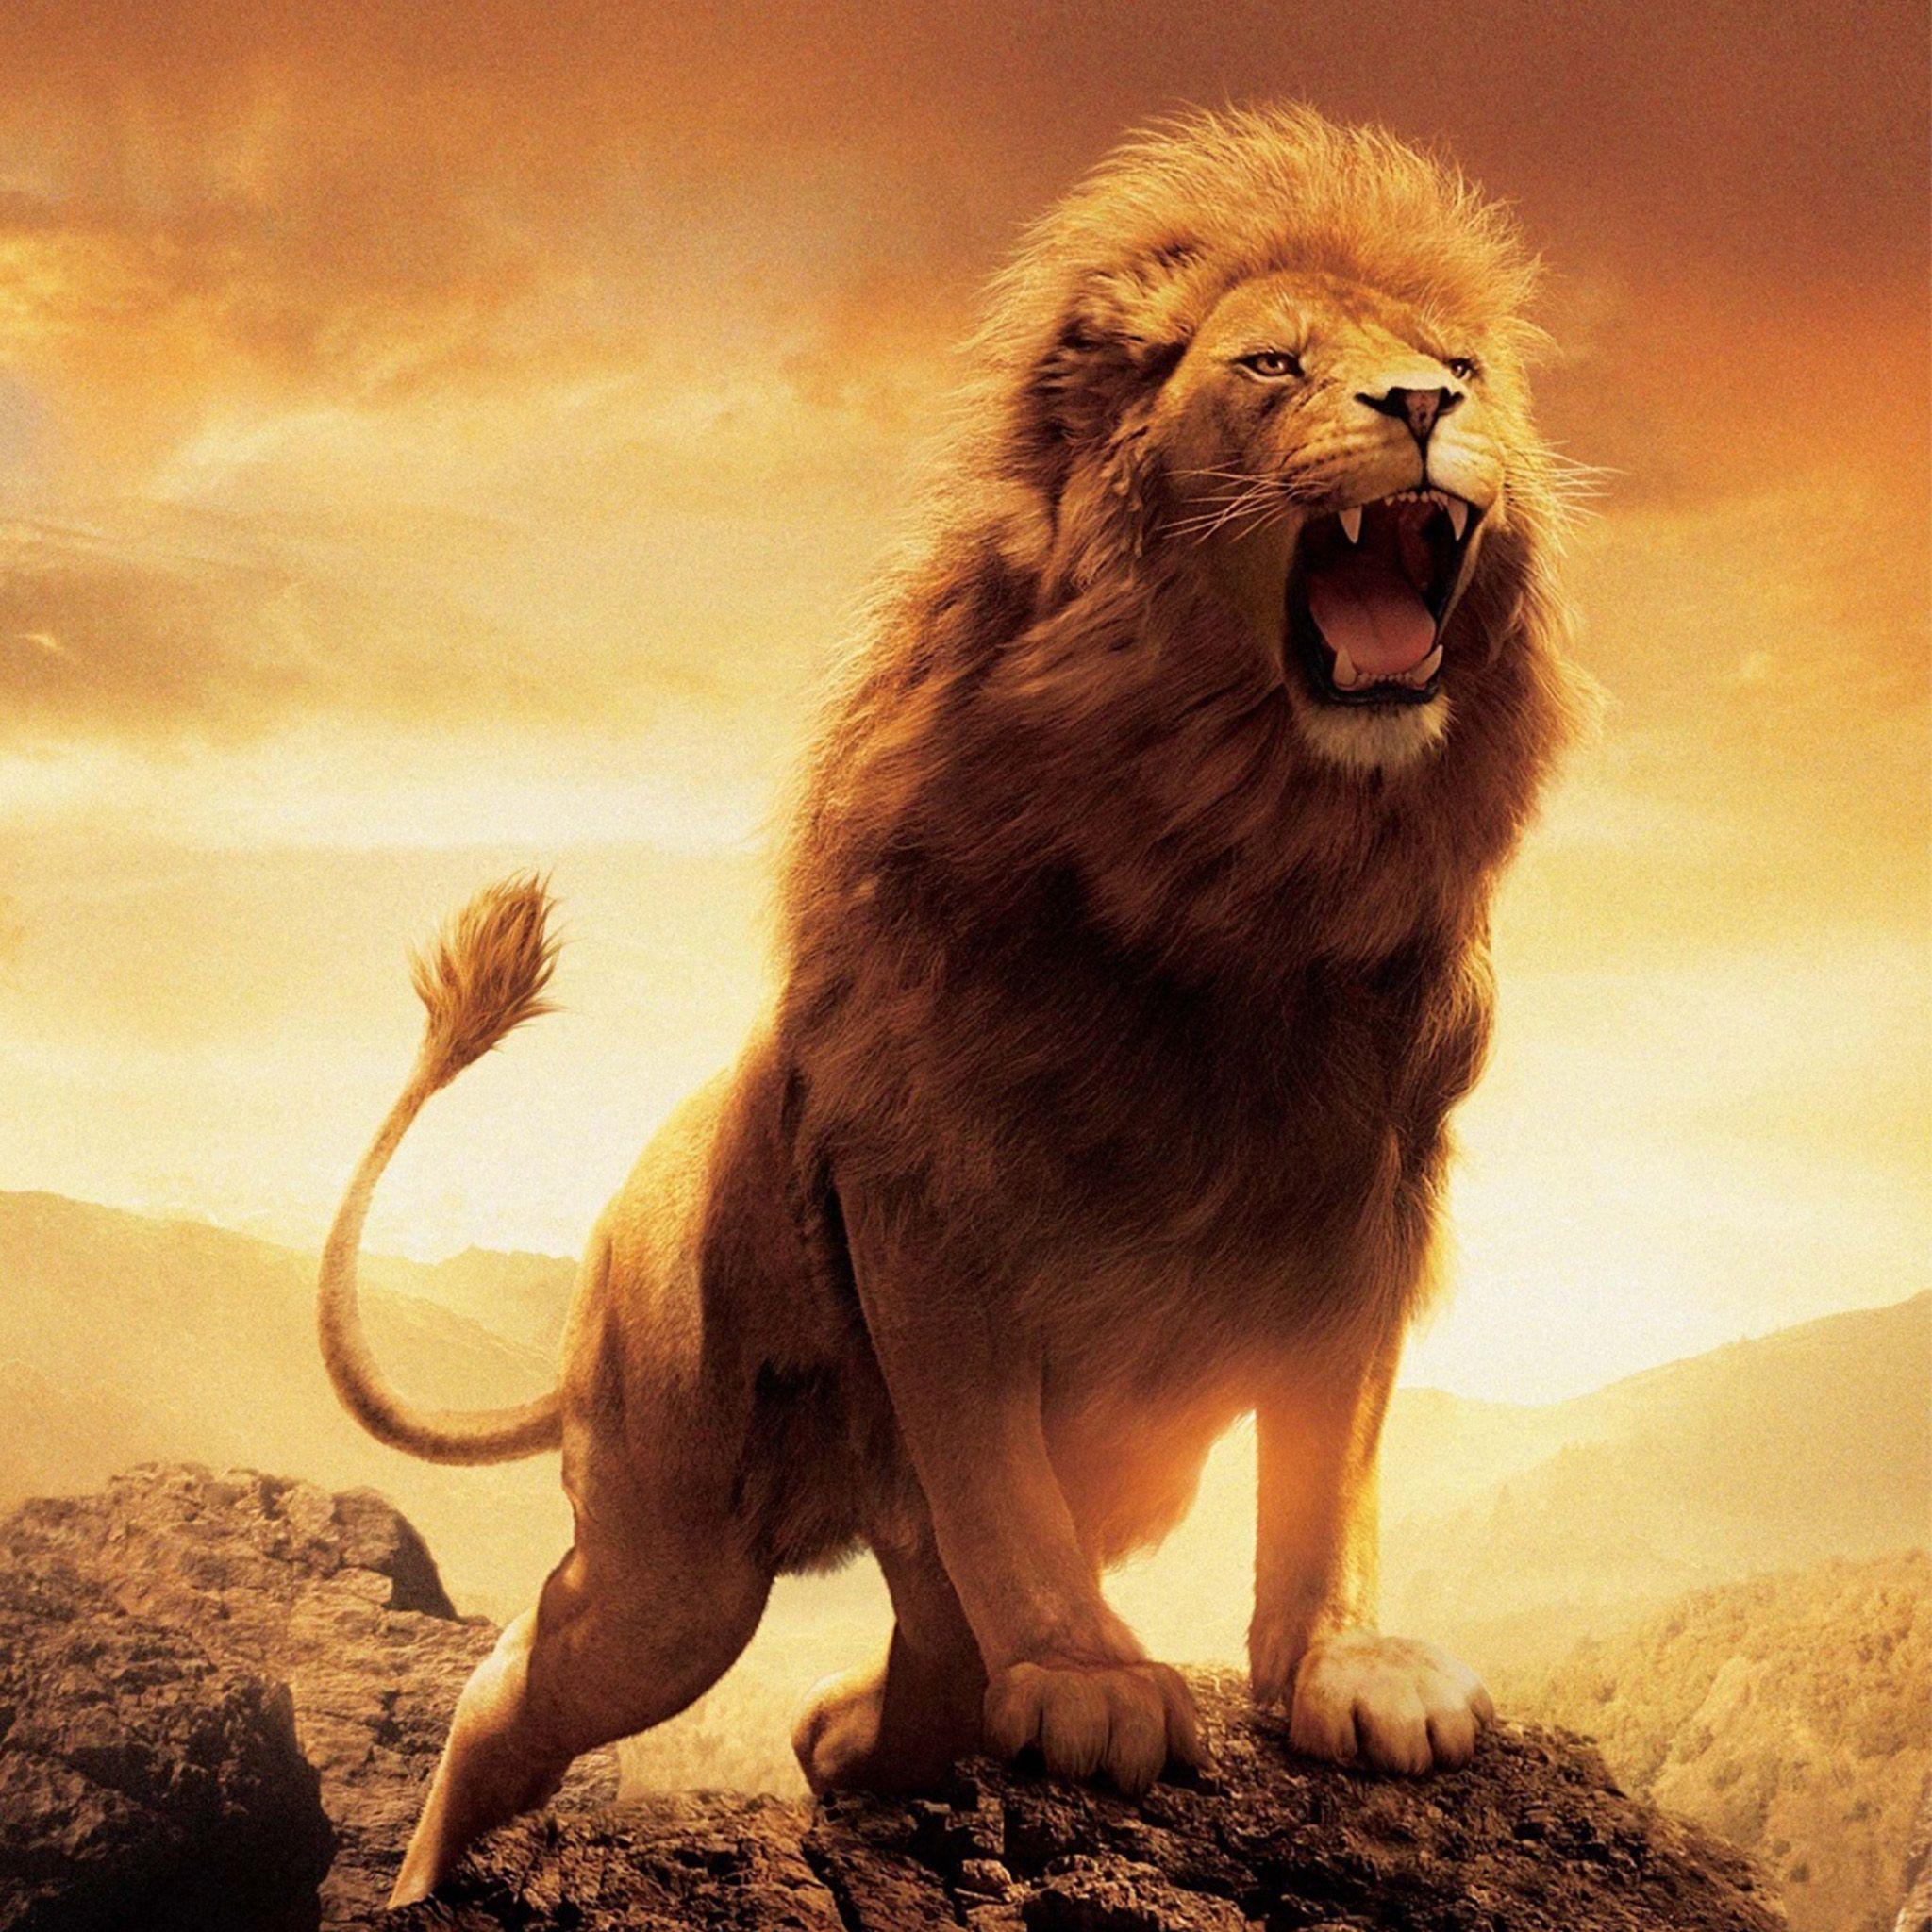 roaring lion images hd png